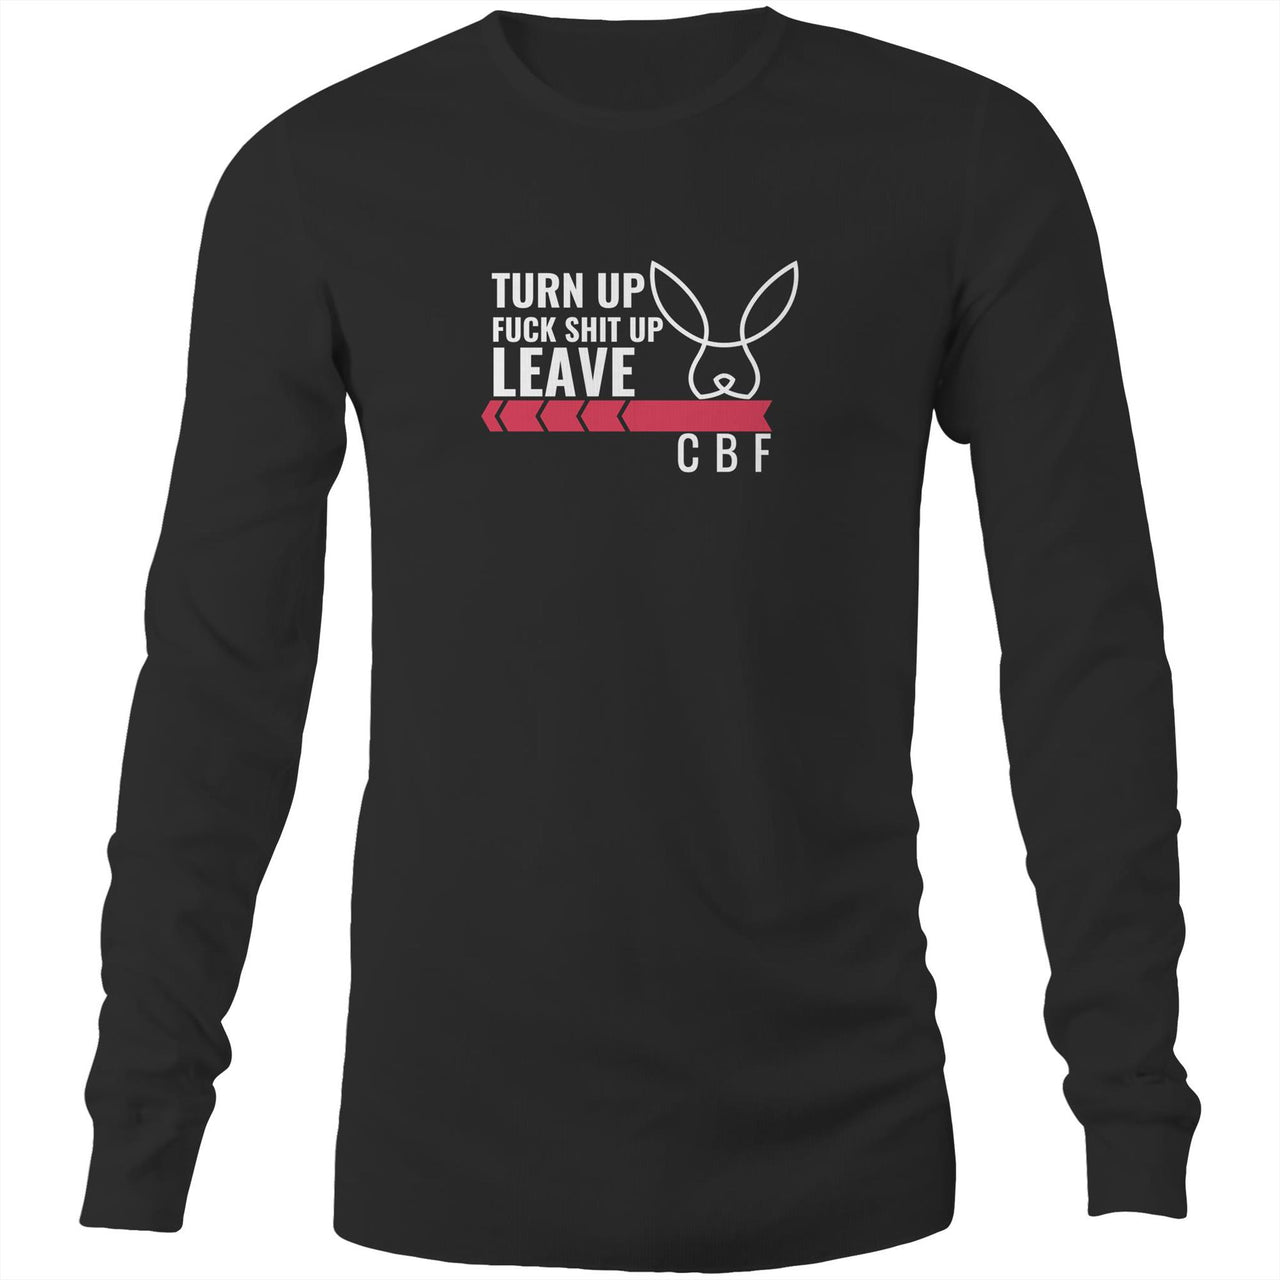 Turn Up Long Sleeve T-Shirt by CBF Clothing